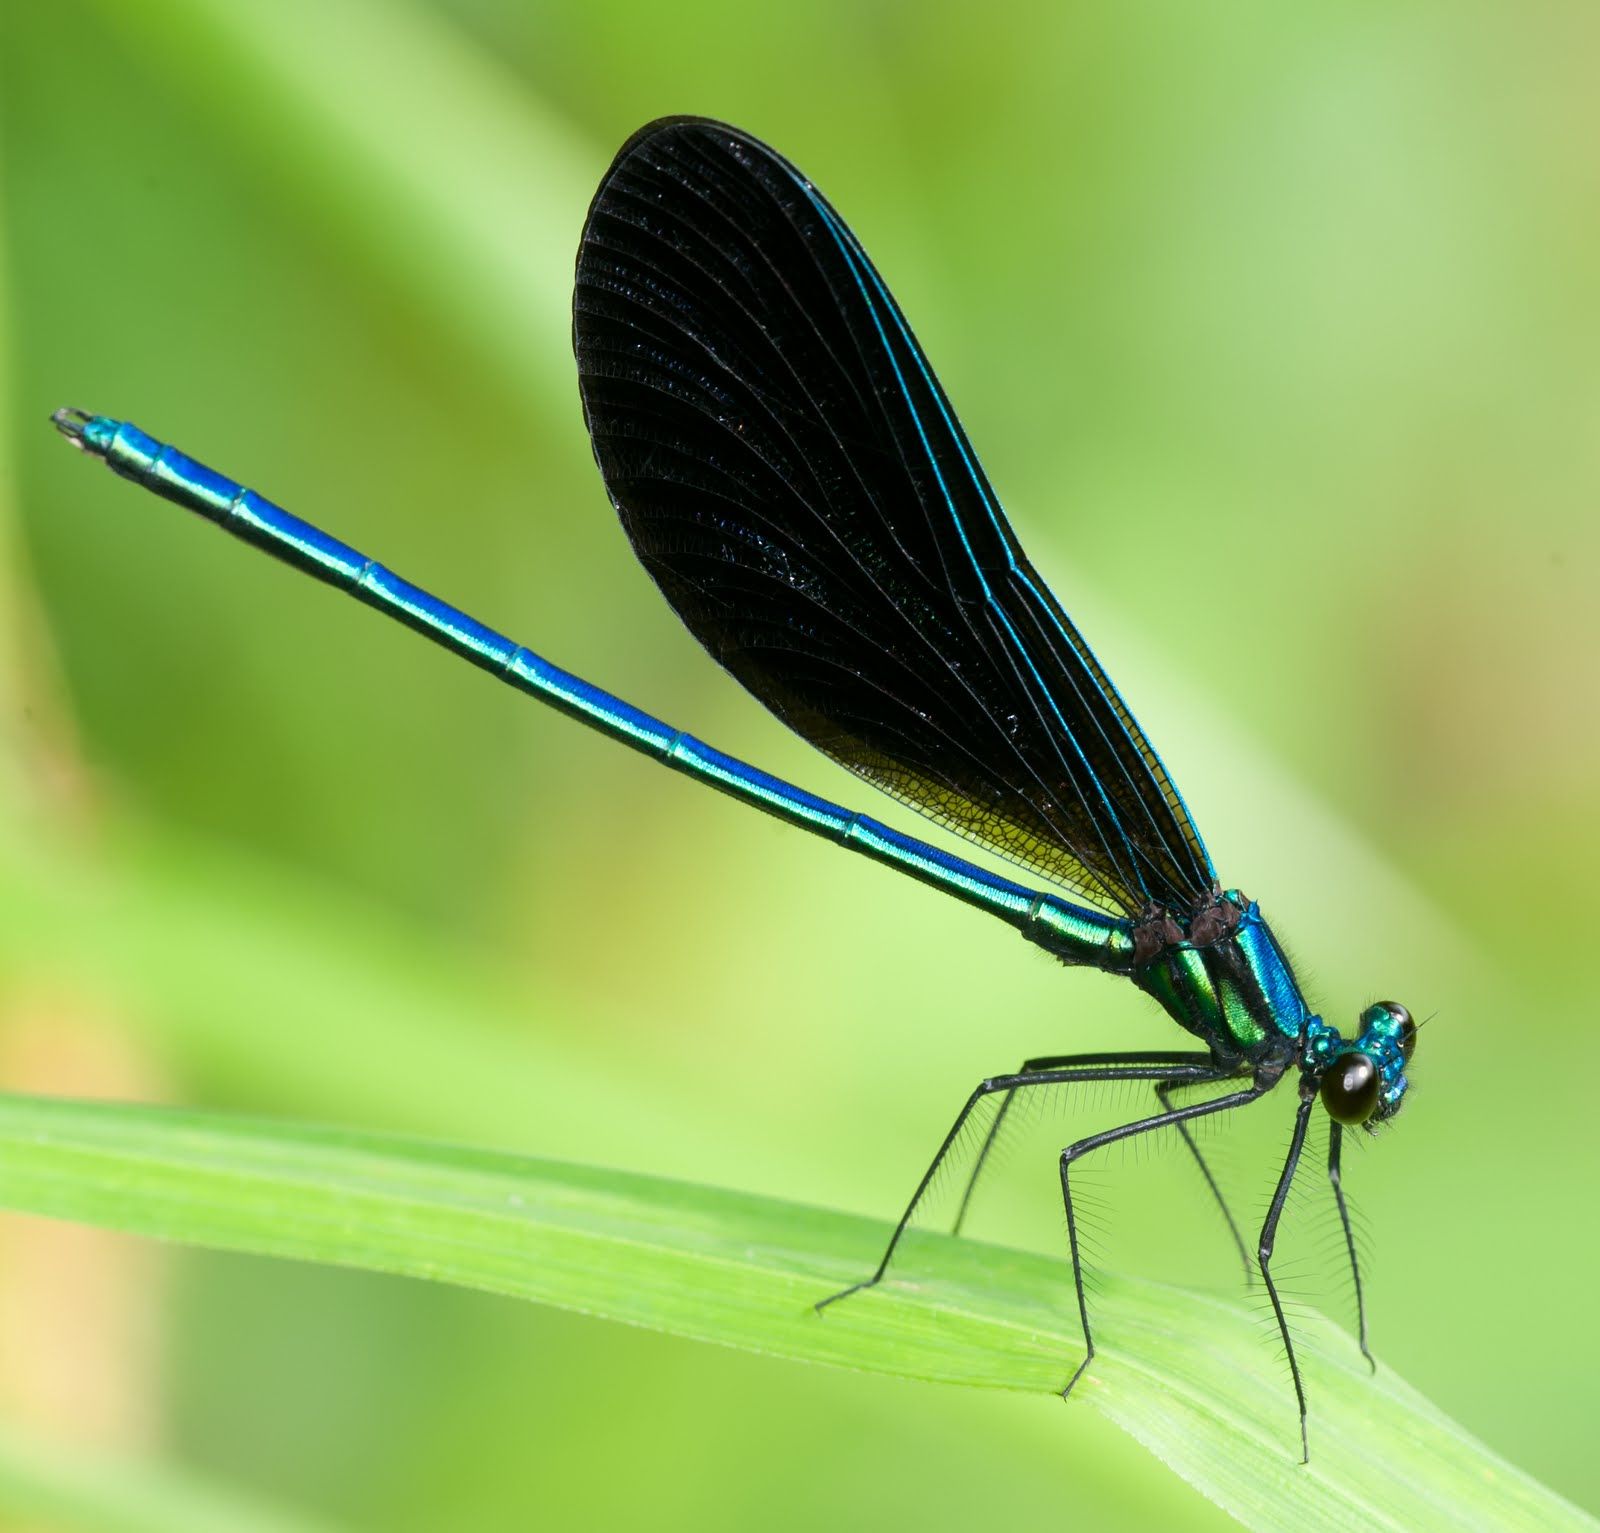 ebony jewelwing, black-winged damselfly | Dragonflies | Pinterest ...